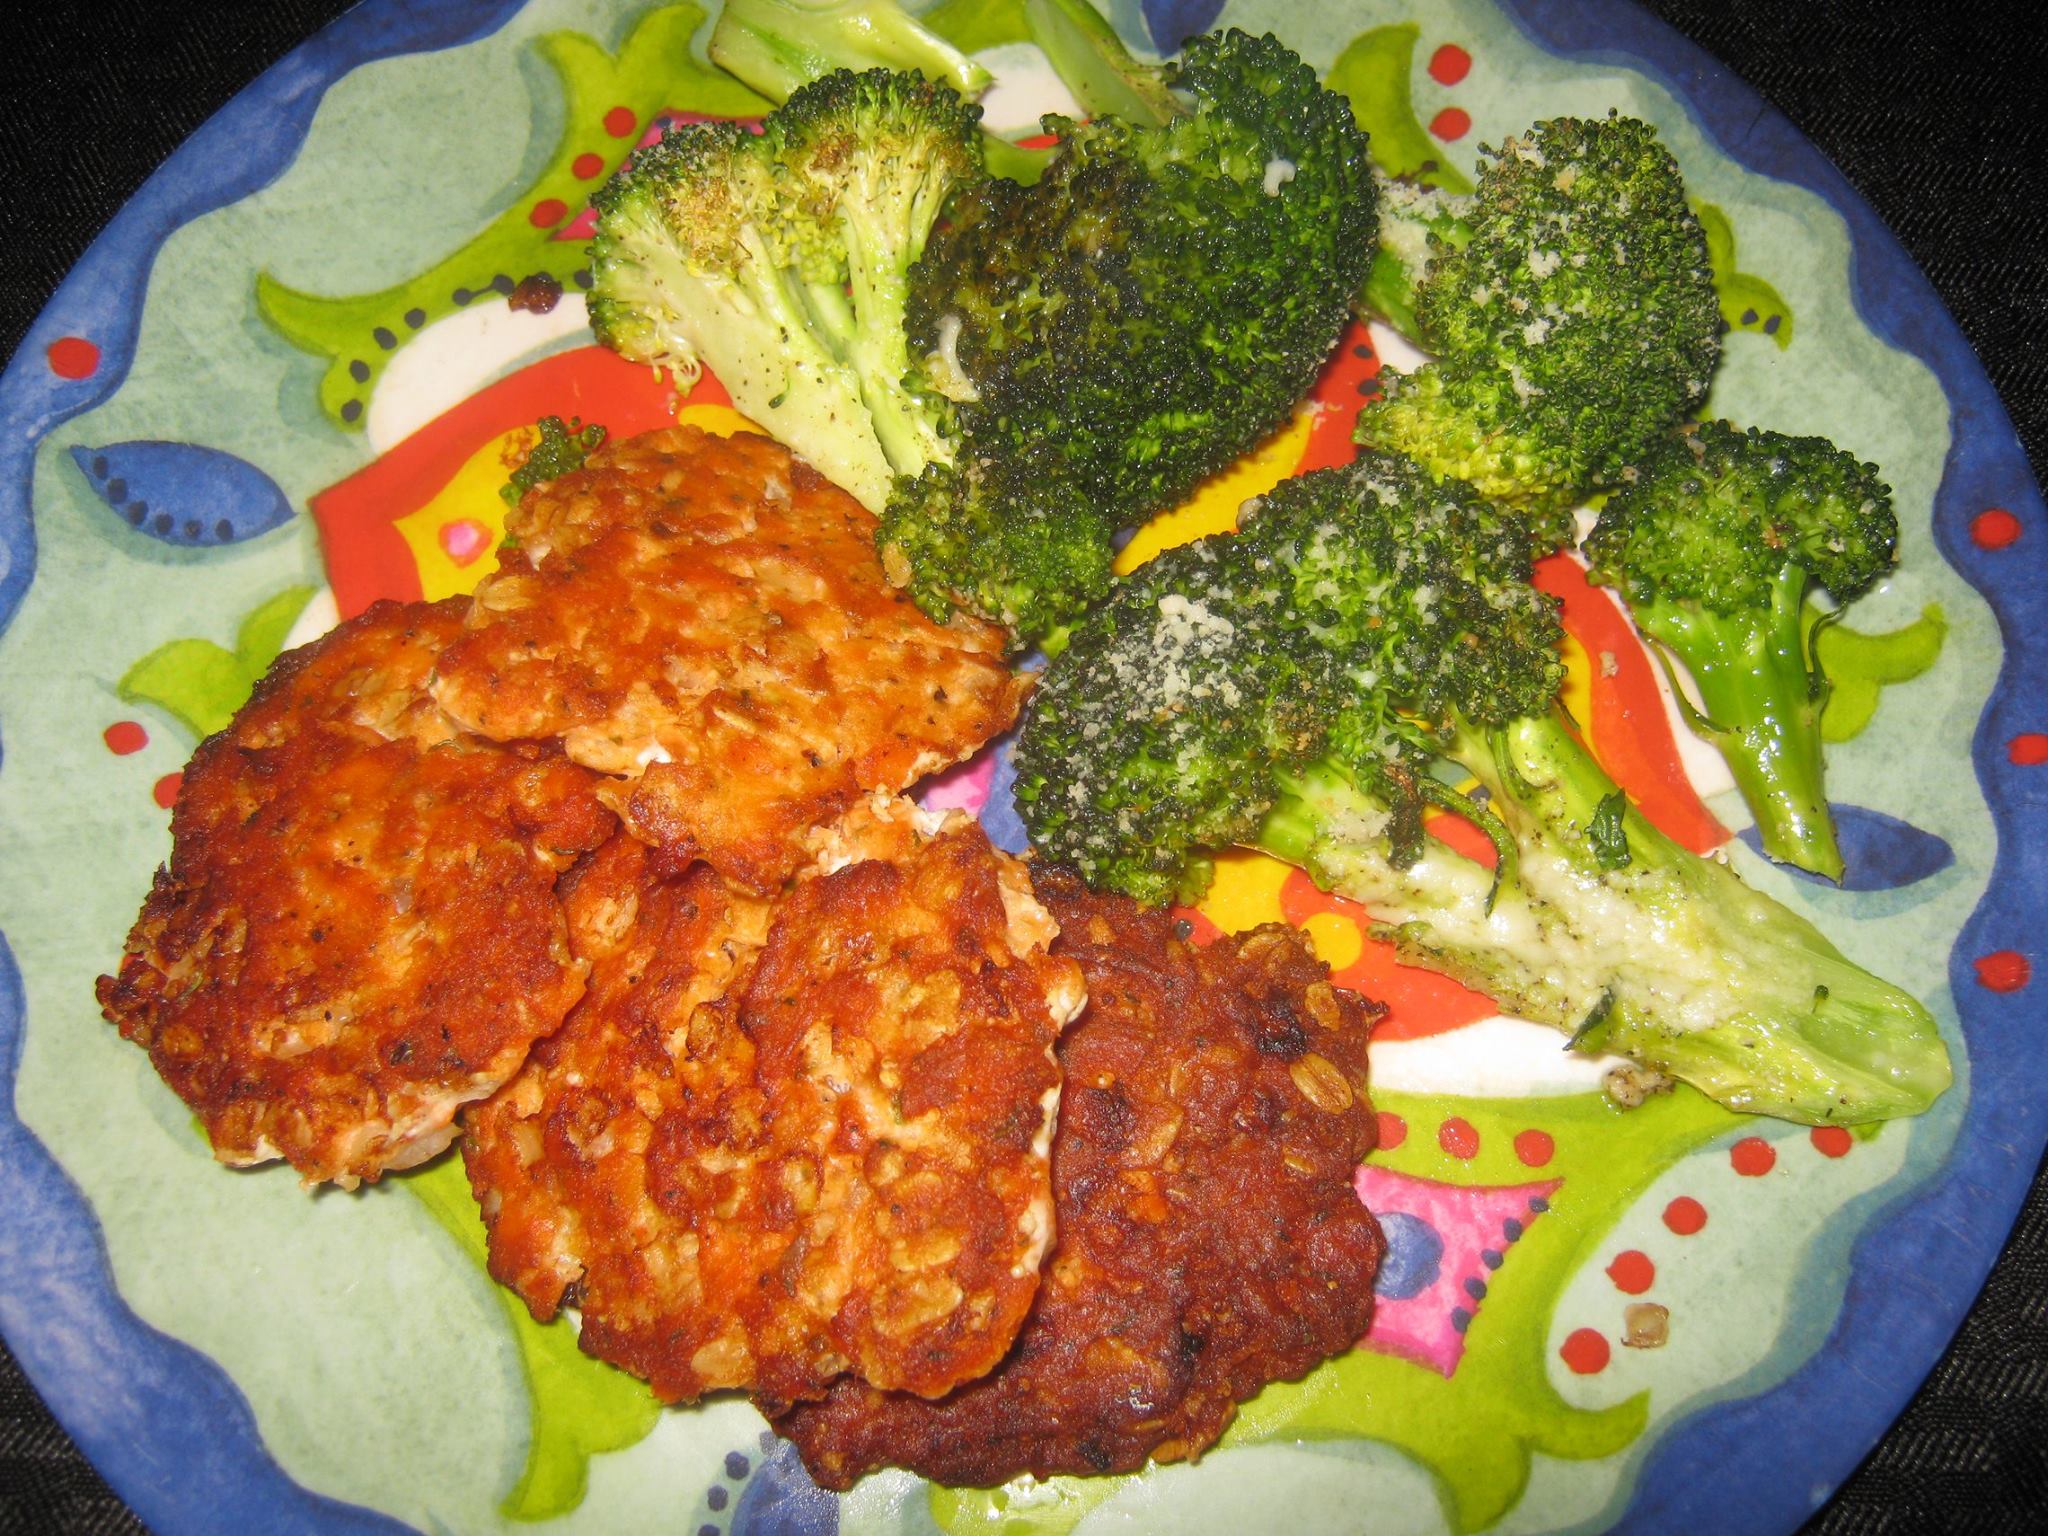 Salmon patties and broccoli parmesan cheese